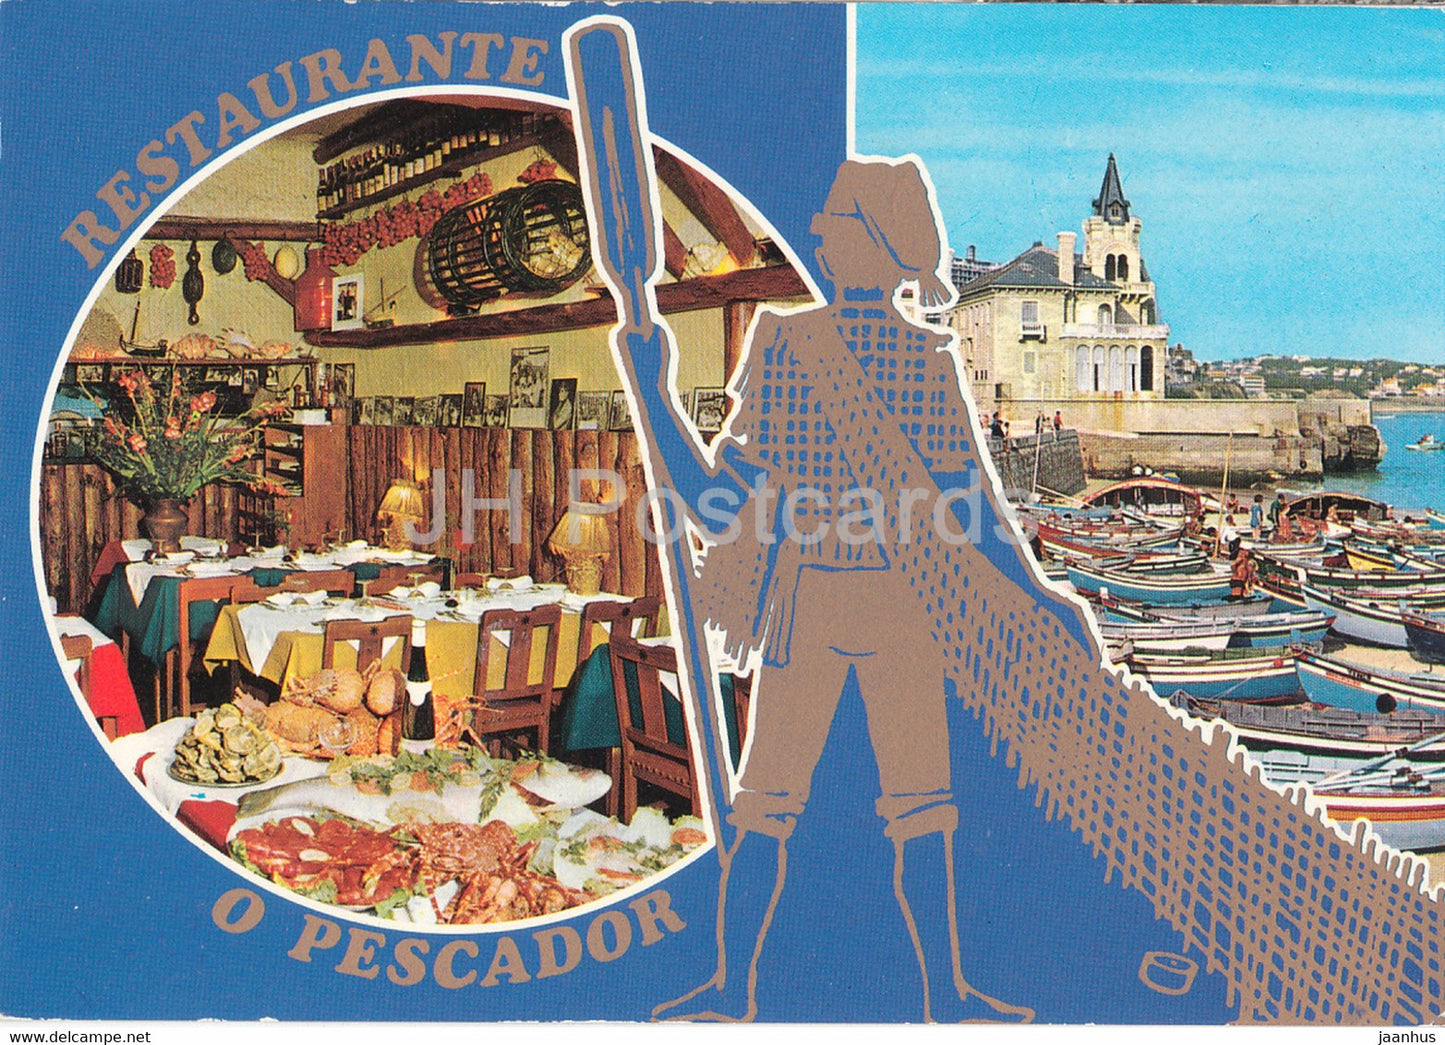 Restaurante o Pescador - Viveiros Proprios - Fish Restaurant - Proper Vivarium Shell Fish - Portugal - unused - JH Postcards